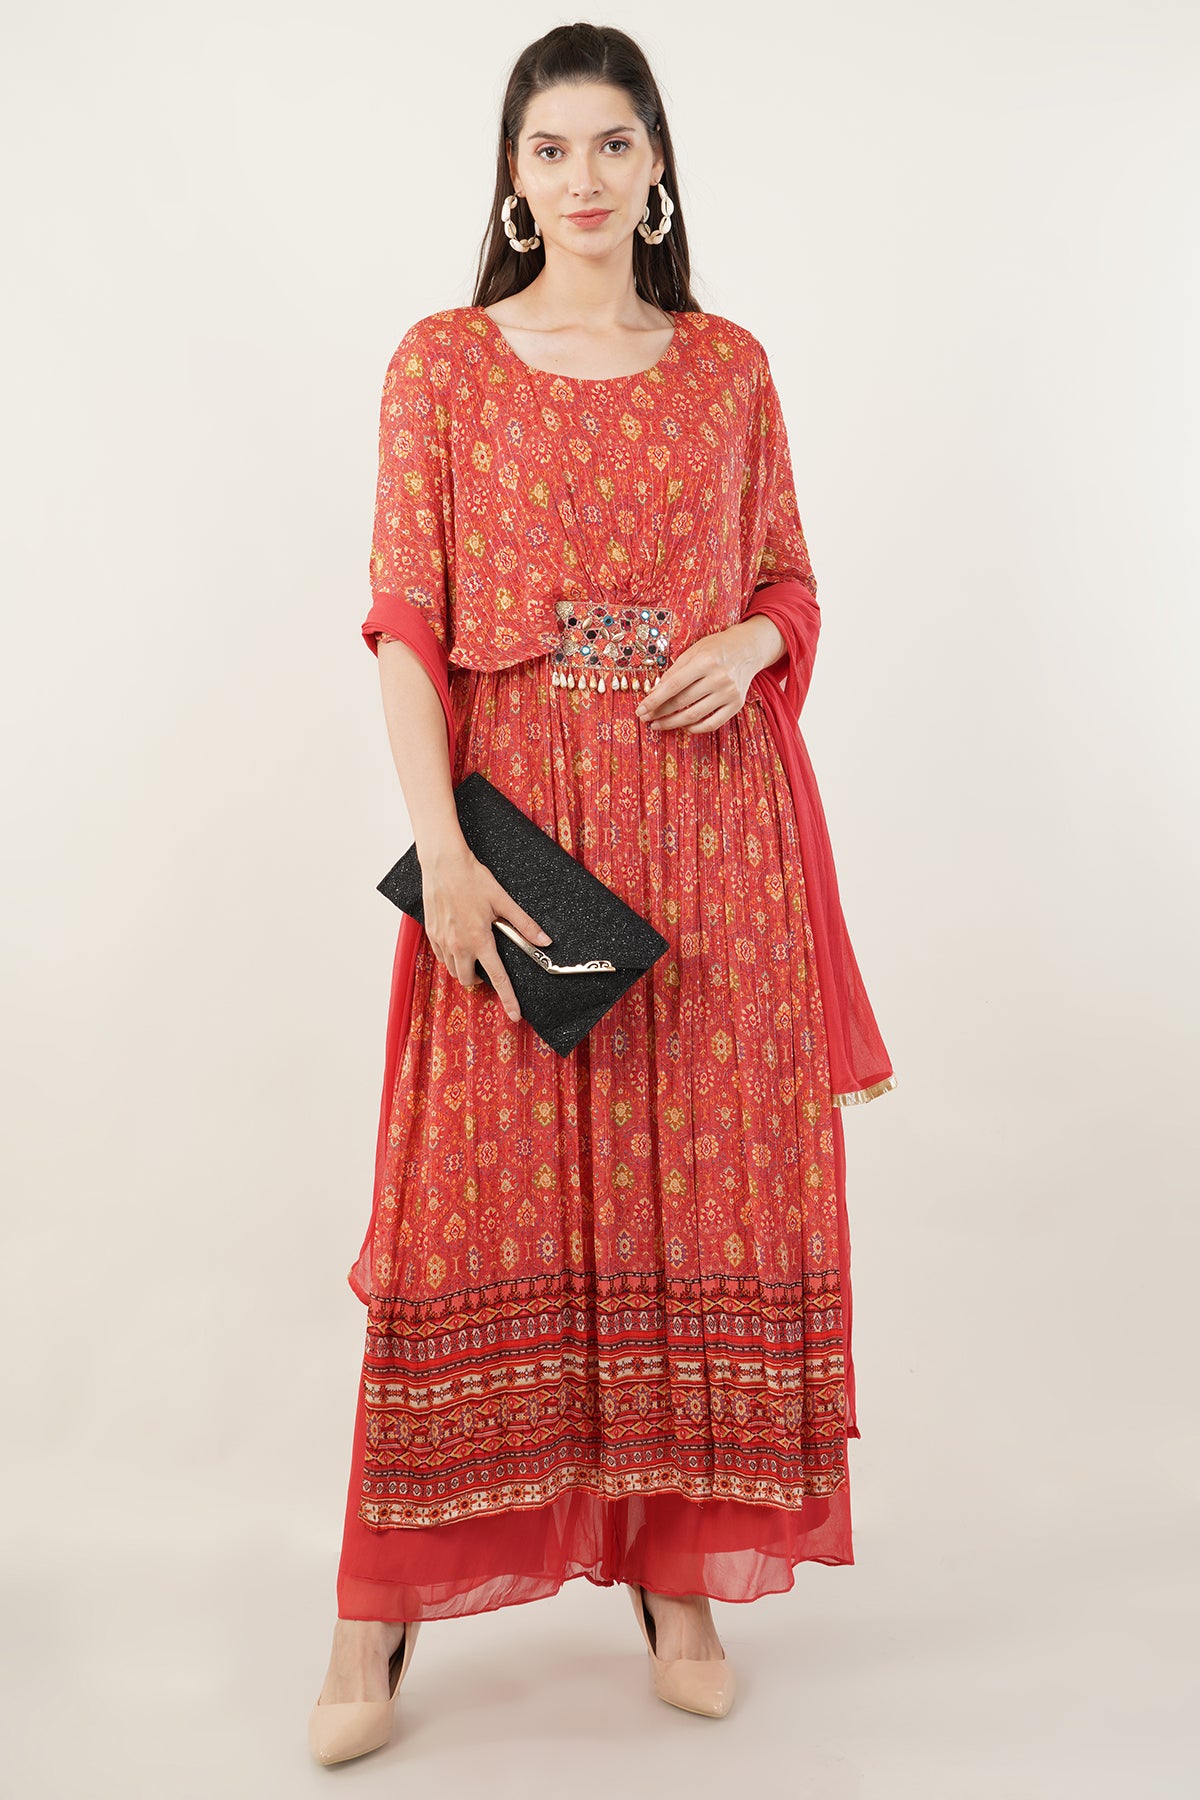 Beautiful pochu | Shrug for dresses, Indian fashion dresses, Fashion dresses